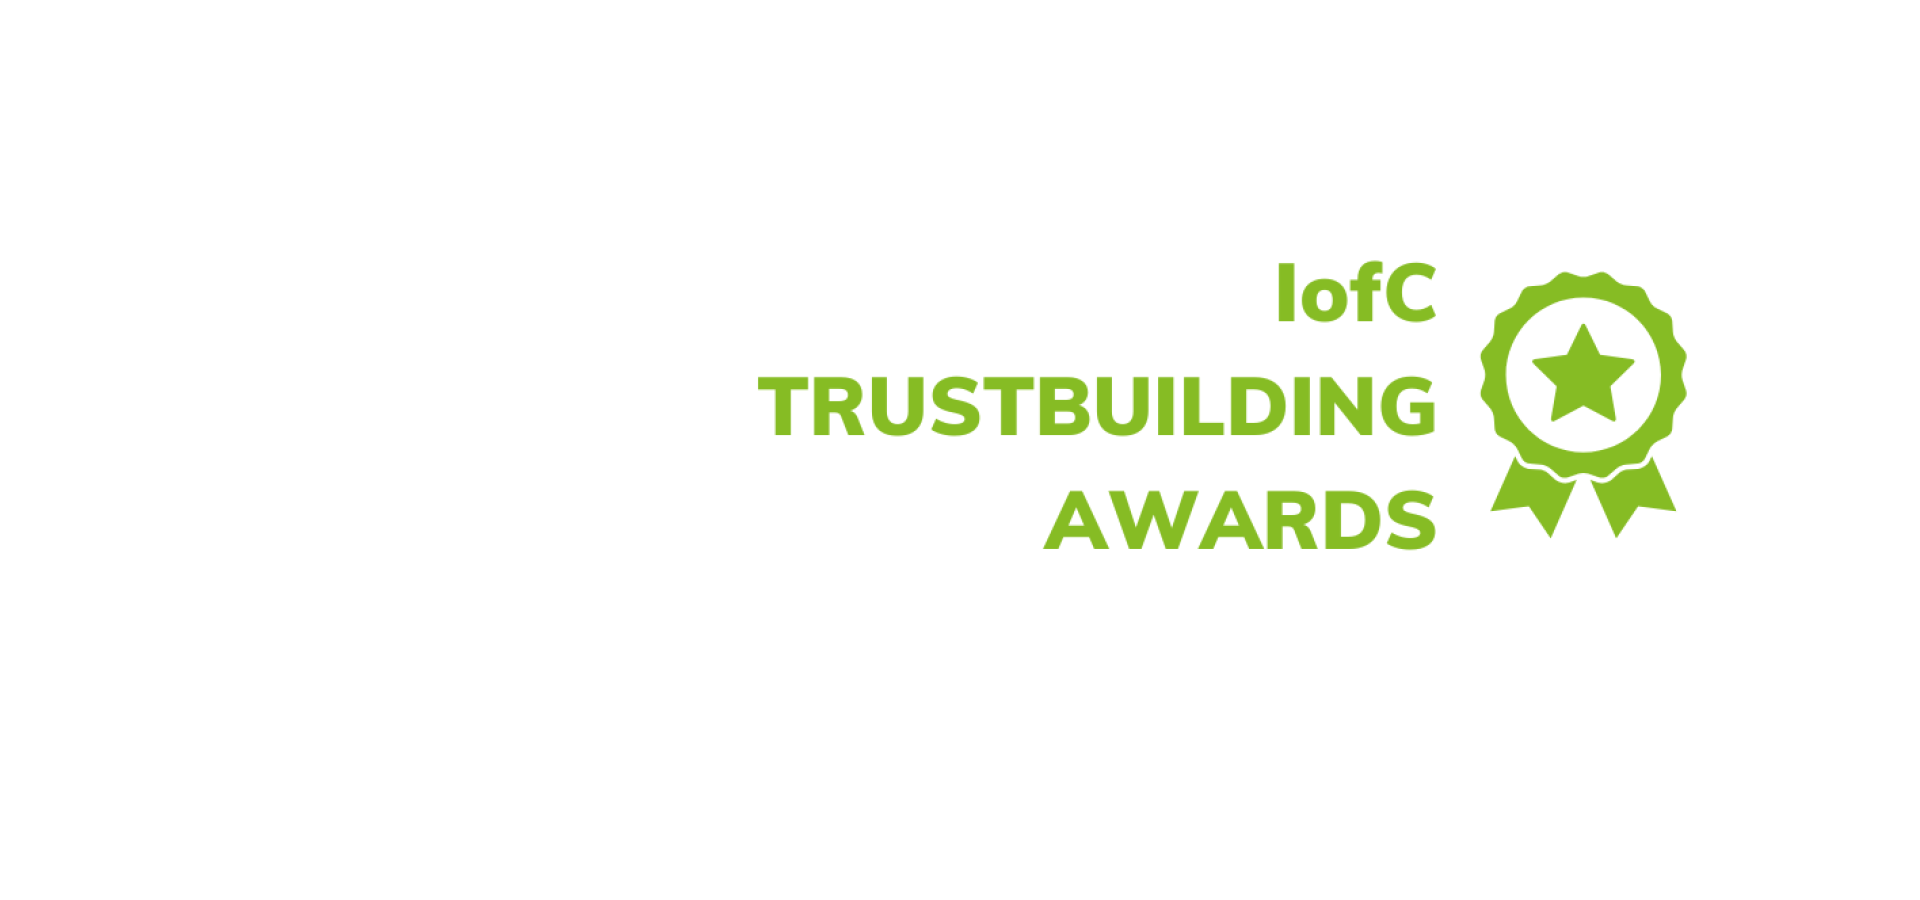 IofC TB Award_Header Image_Announcement